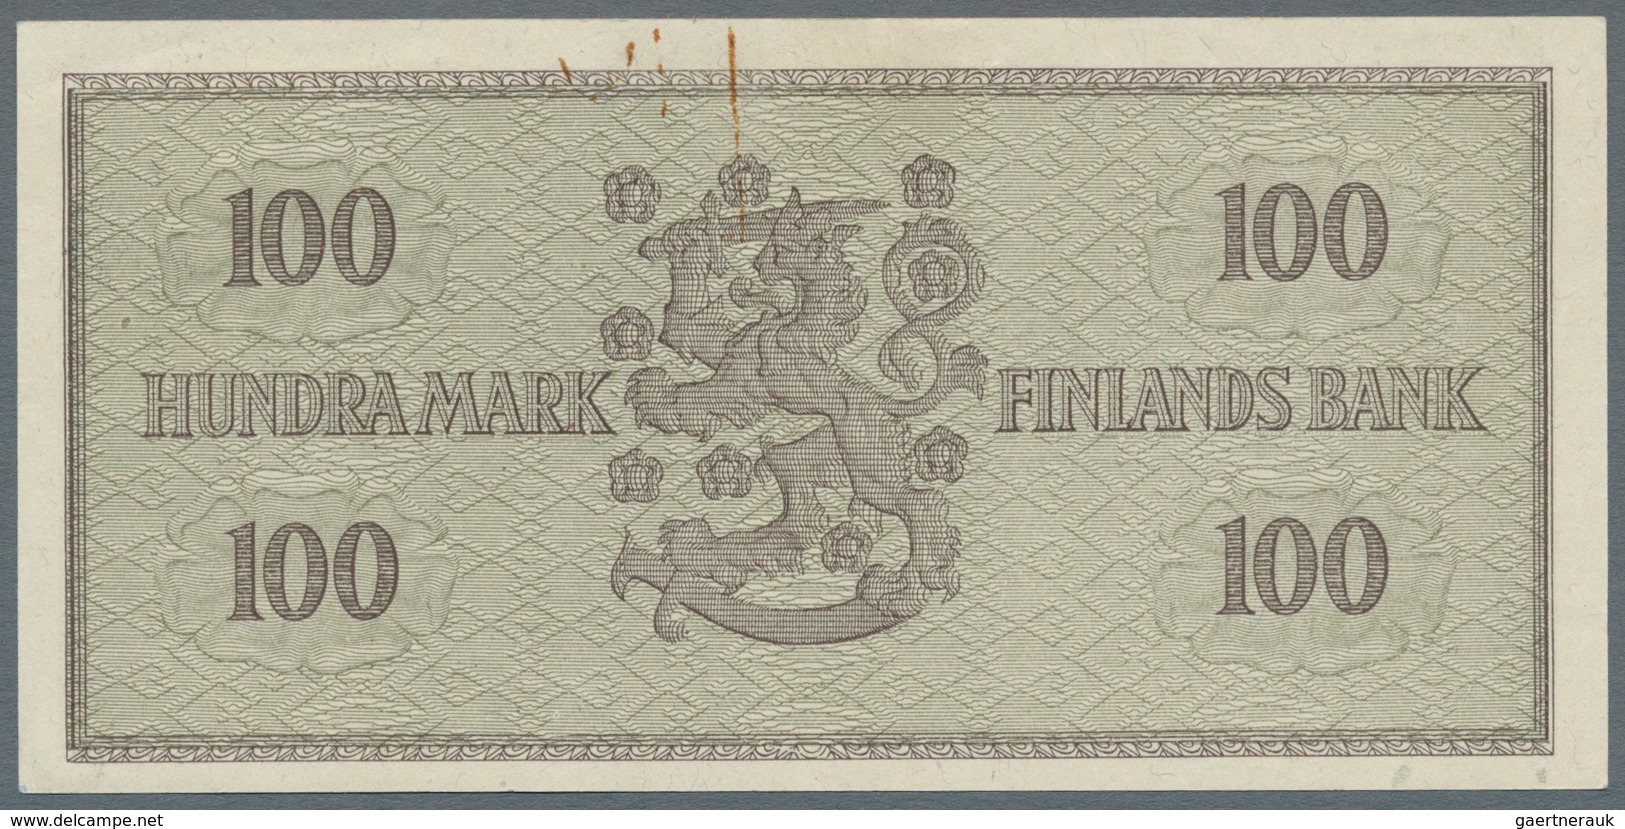 Finland / Finnland: Pair With 100 Markkaa 1955 P.91 In VF- With Rusty Spots And 500 Markkaa 1956 P.9 - Finland